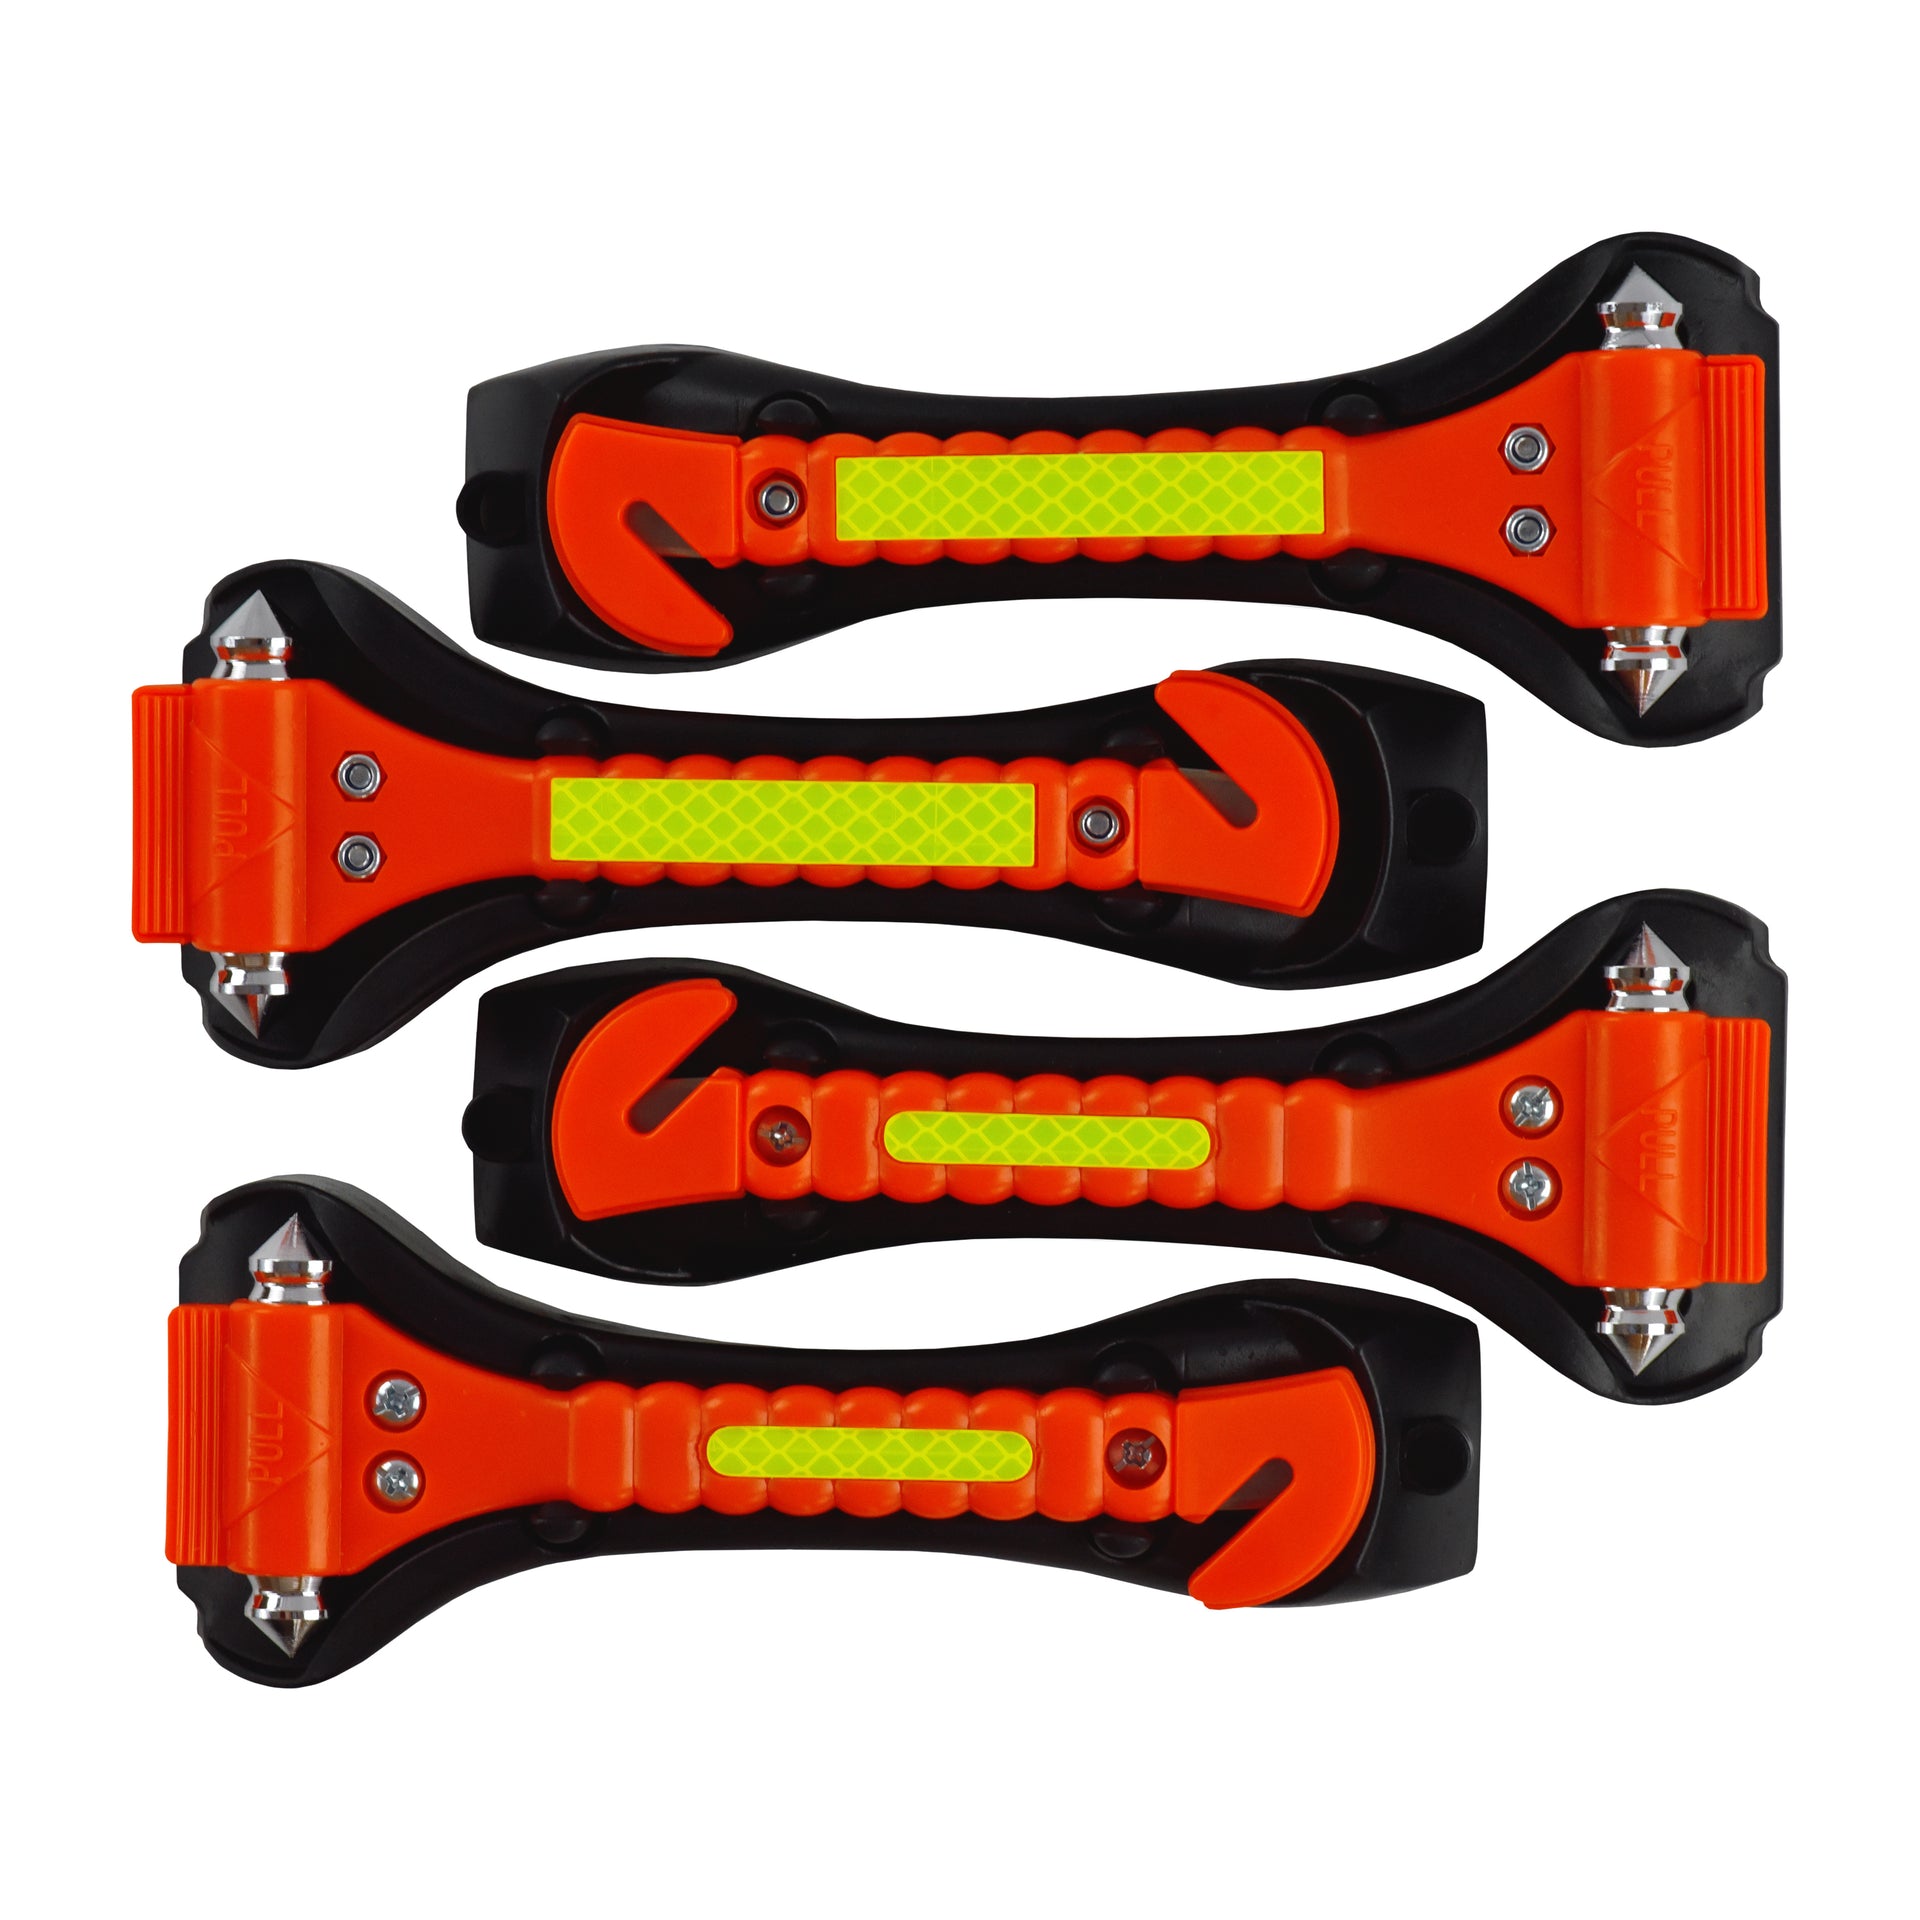 Segomo Tools 4 x Emergency Escape Safety Hammers with Car Window Breaker &  Seat Belt Cutter - ESH04